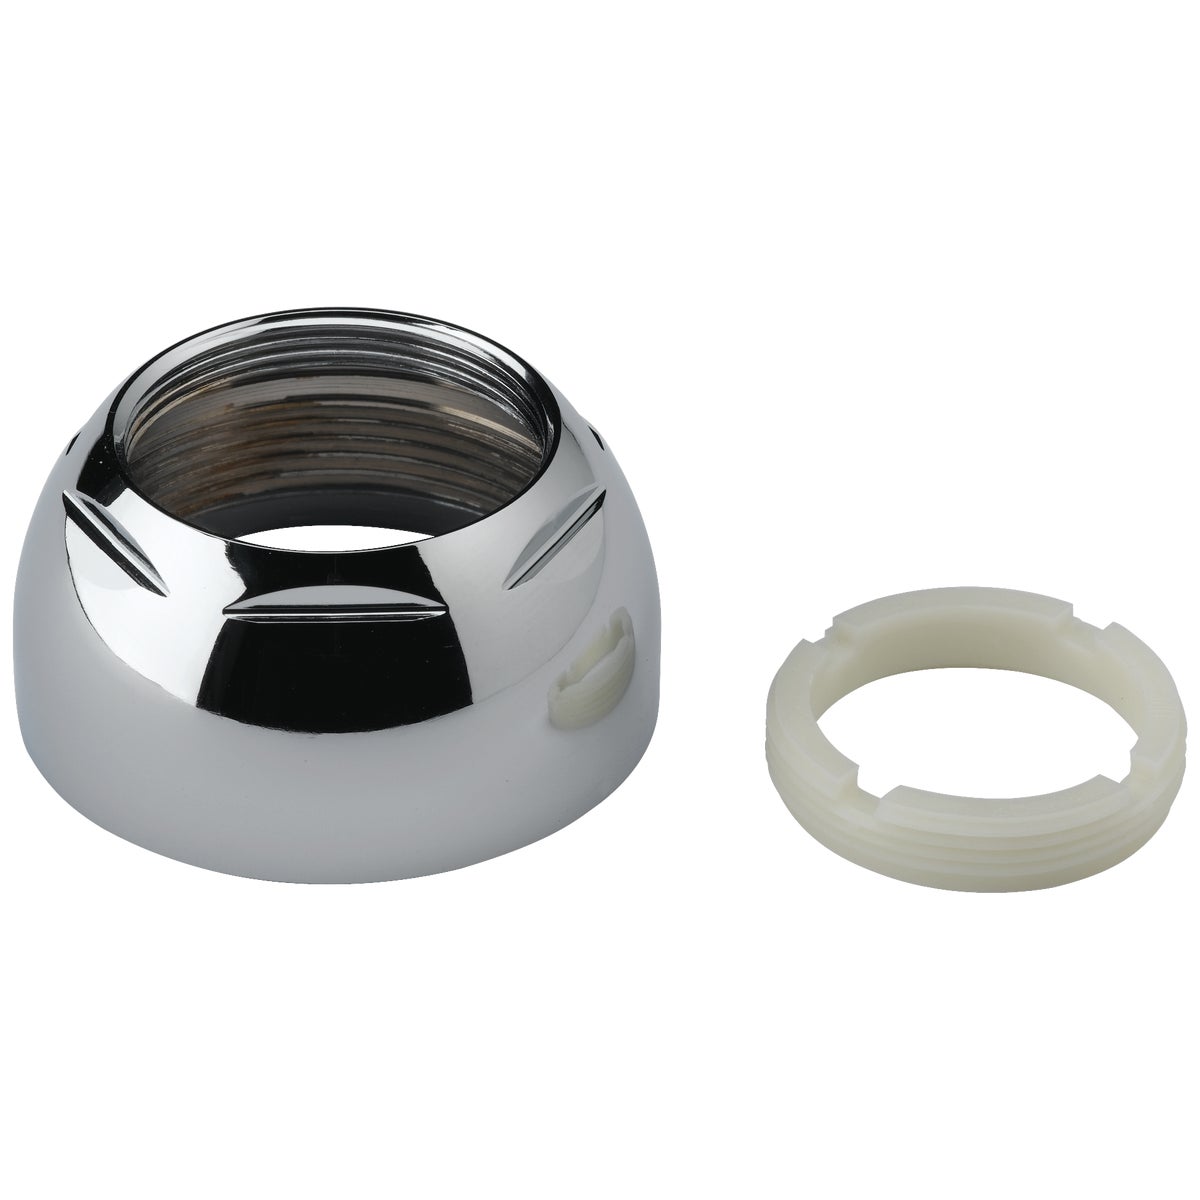 Delta Lever Handle Cap Assembly for Delta Single Handle Kitchen Faucet